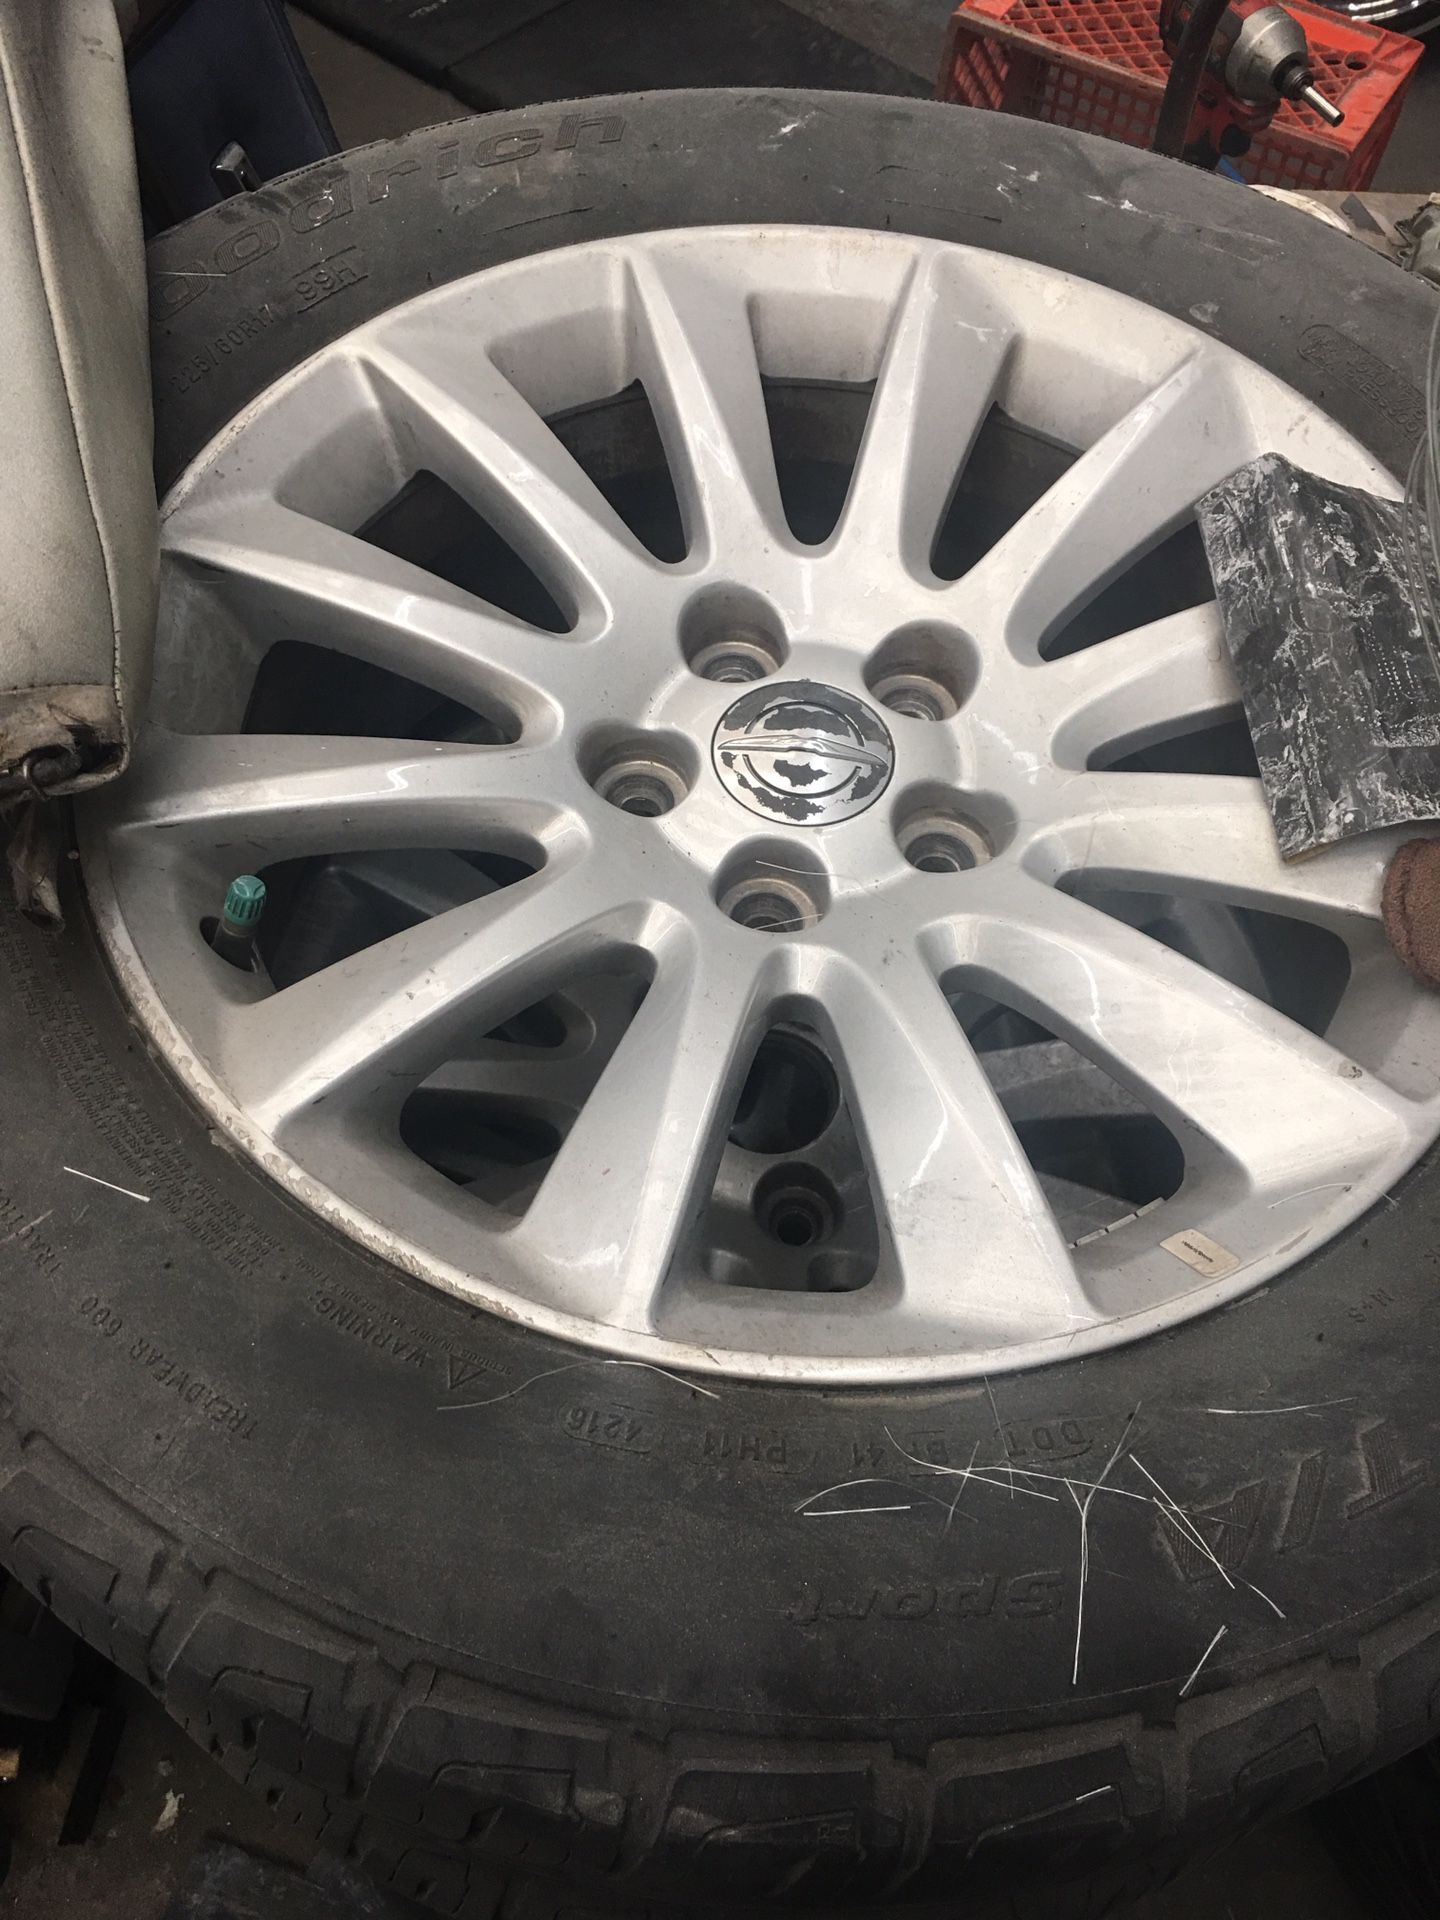 Chrysler 300 rims and tires